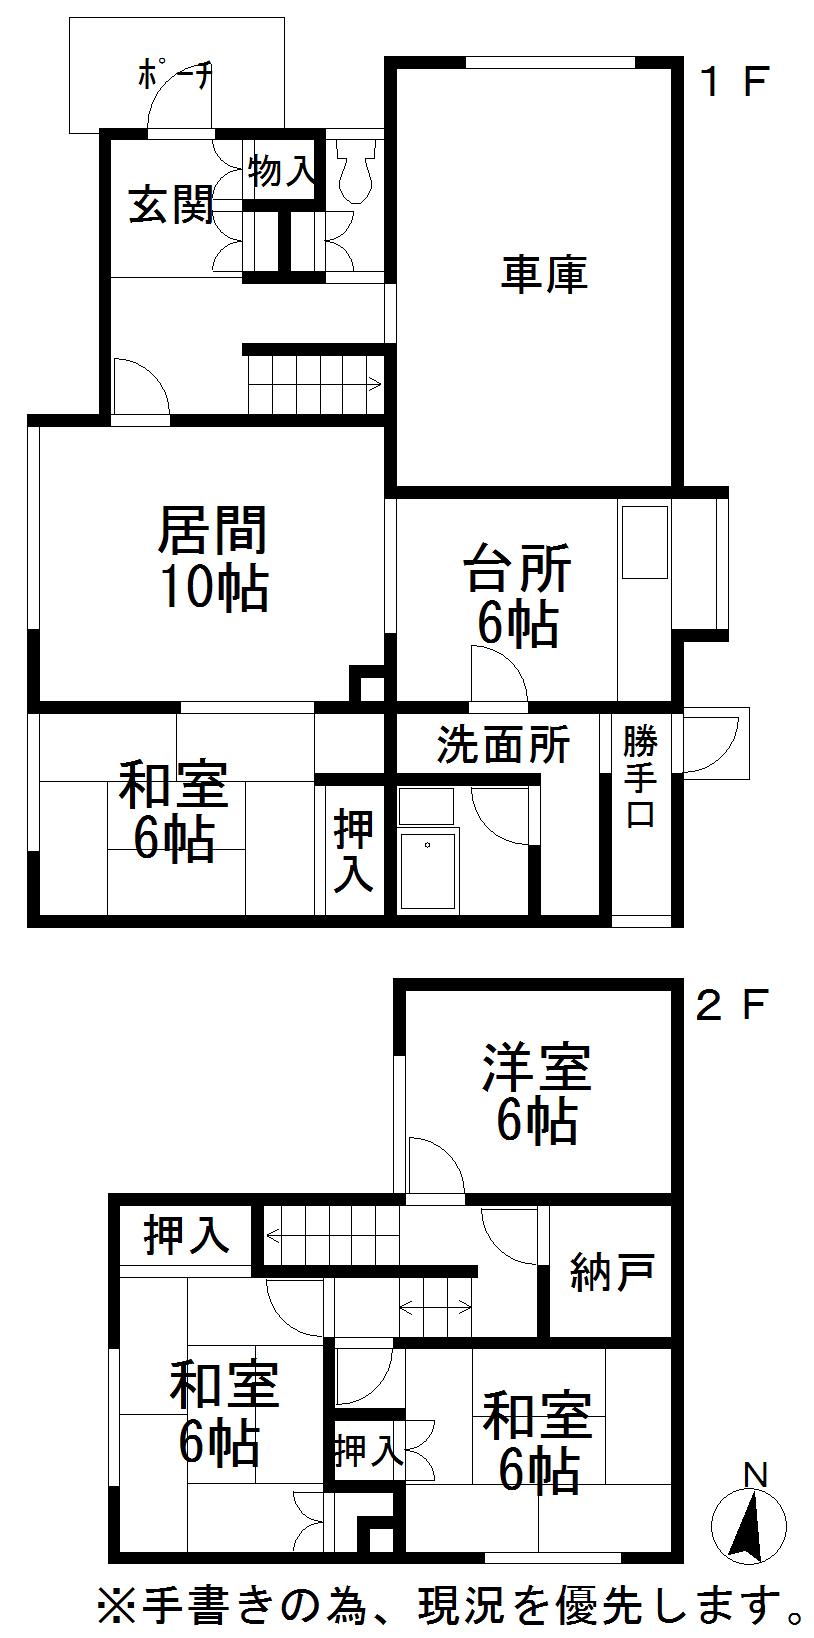 Floor plan. 3.5 million yen, 4LDK + S (storeroom), Land area 284.76 sq m , Building area 125.04 sq m